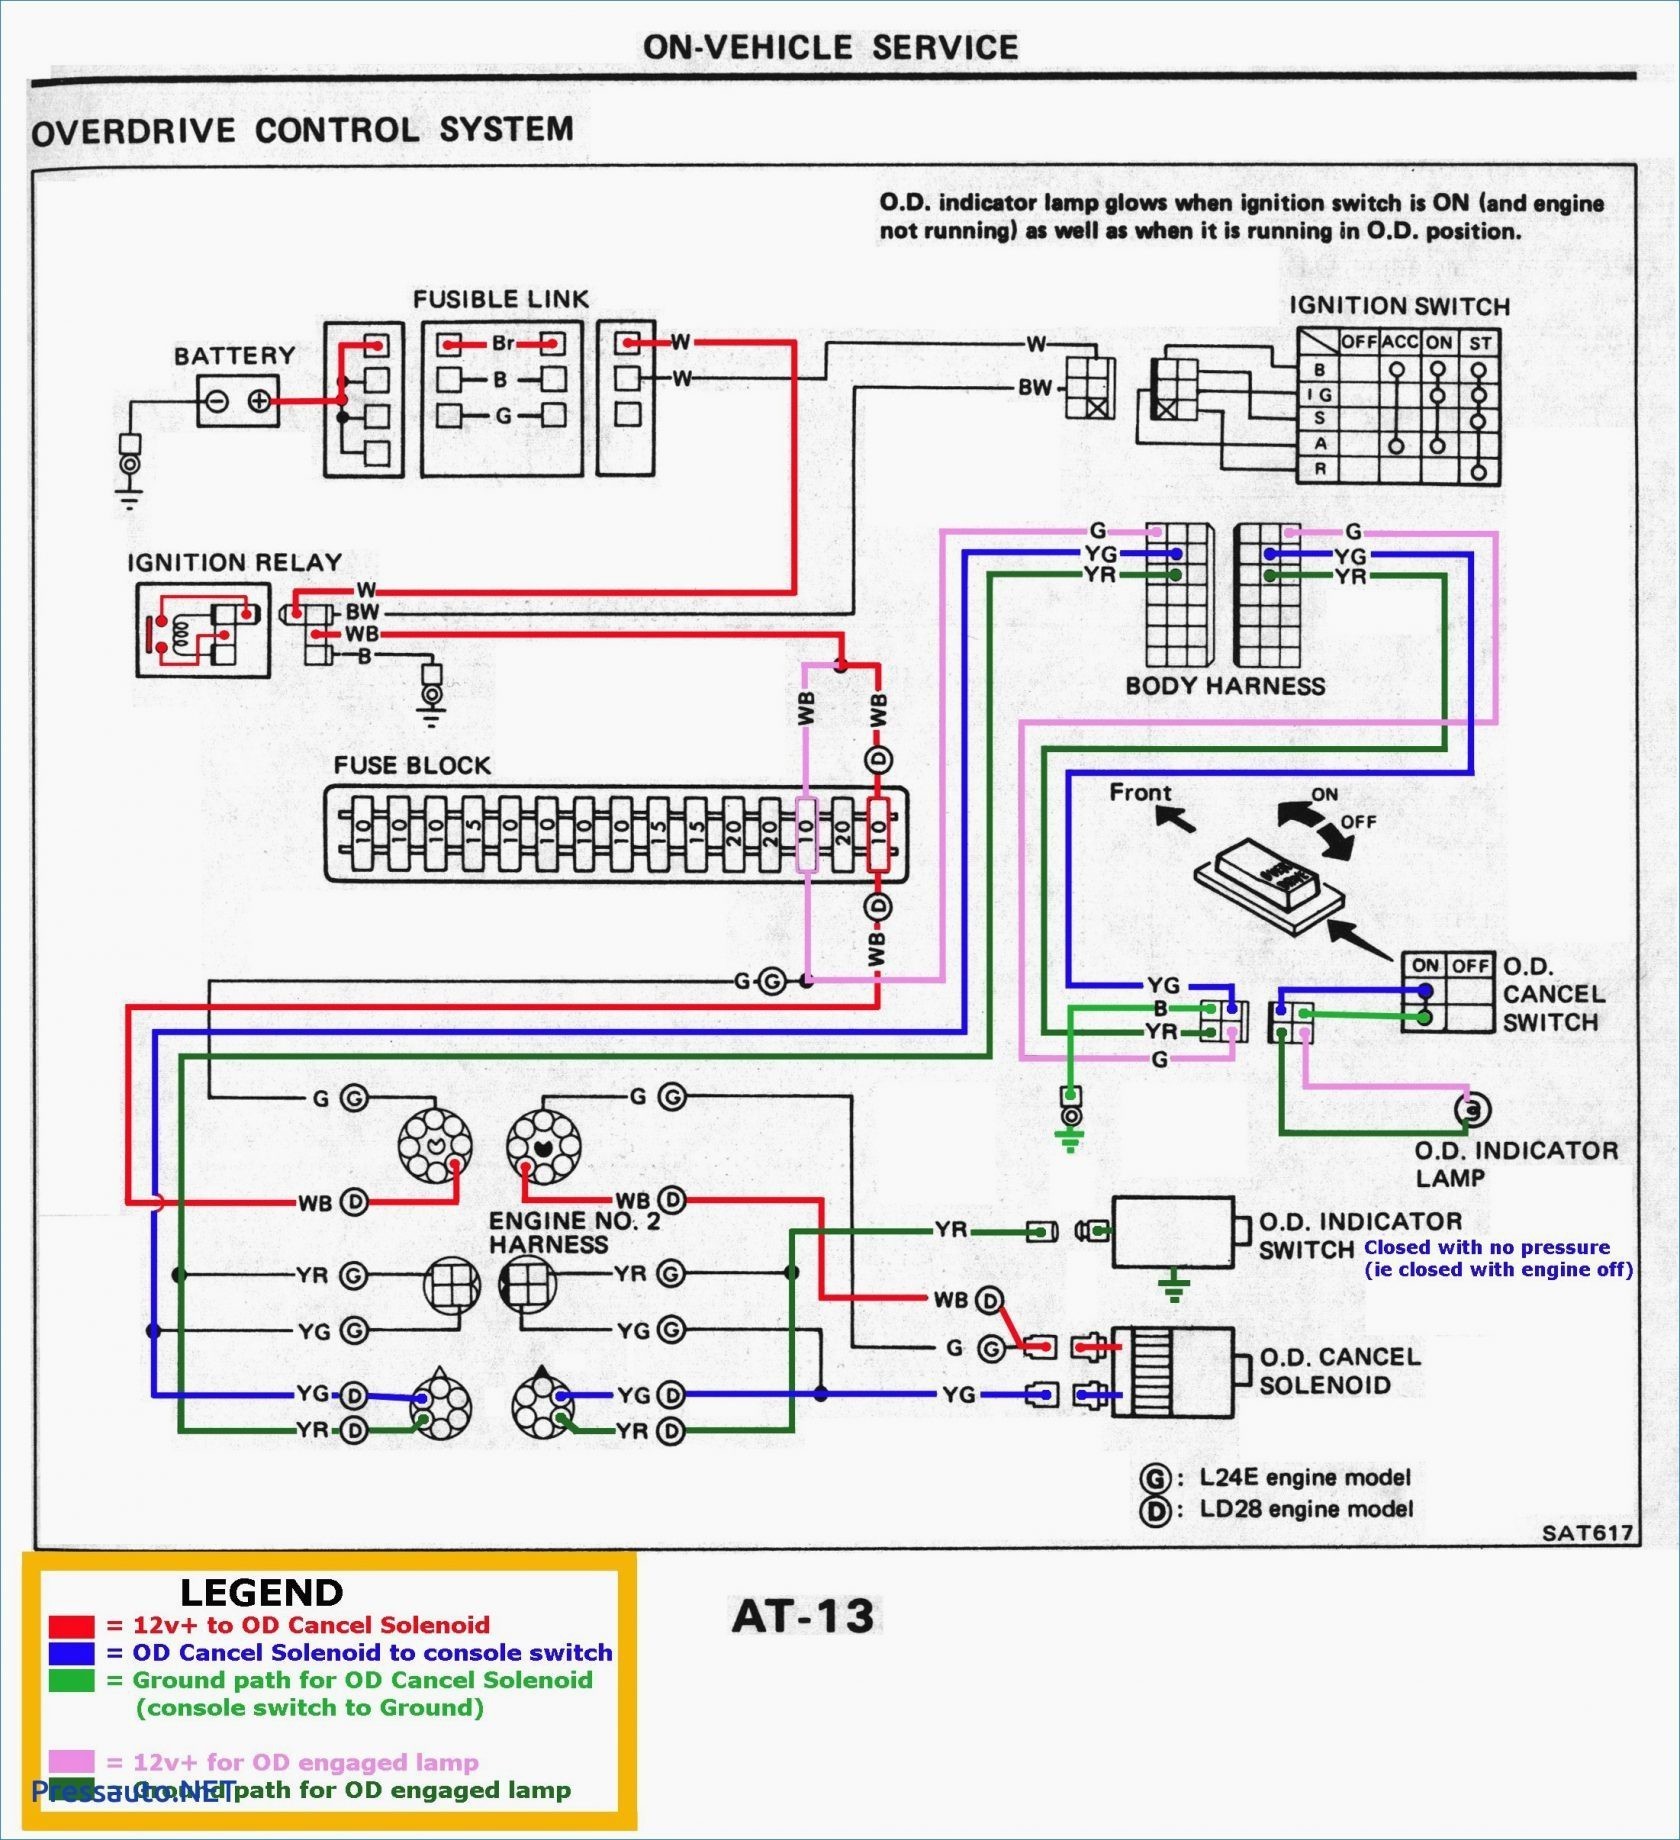 Brake assembly Diagram Bmw X5 E53 Parts Diagram Wiring Diagram Inside Of Brake assembly Diagram